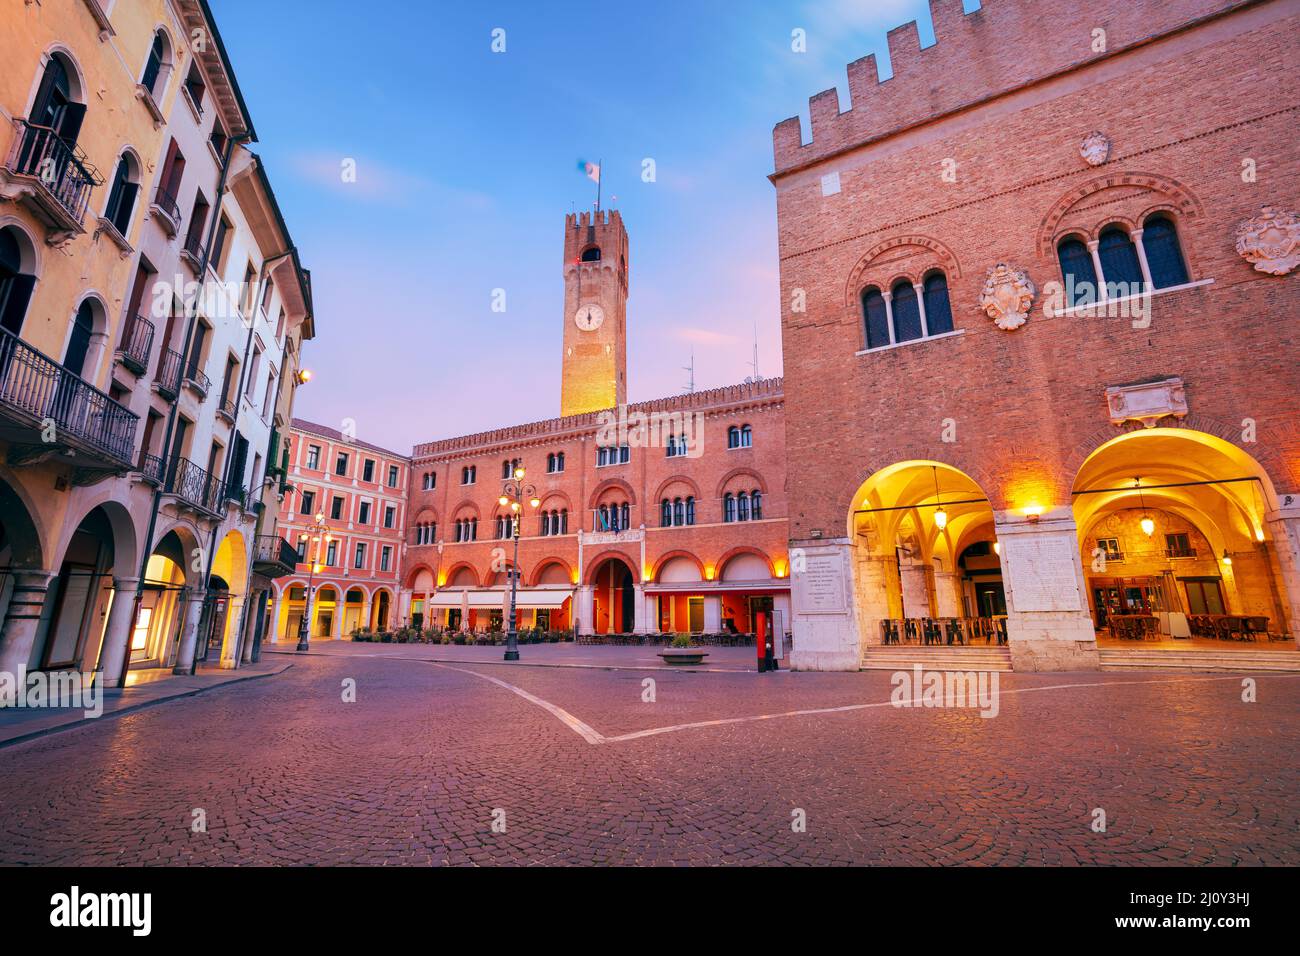 Treviso, Italia. Imagen del paisaje urbano del centro histórico de Treviso, Italia, con la antigua plaza al amanecer. Foto de stock